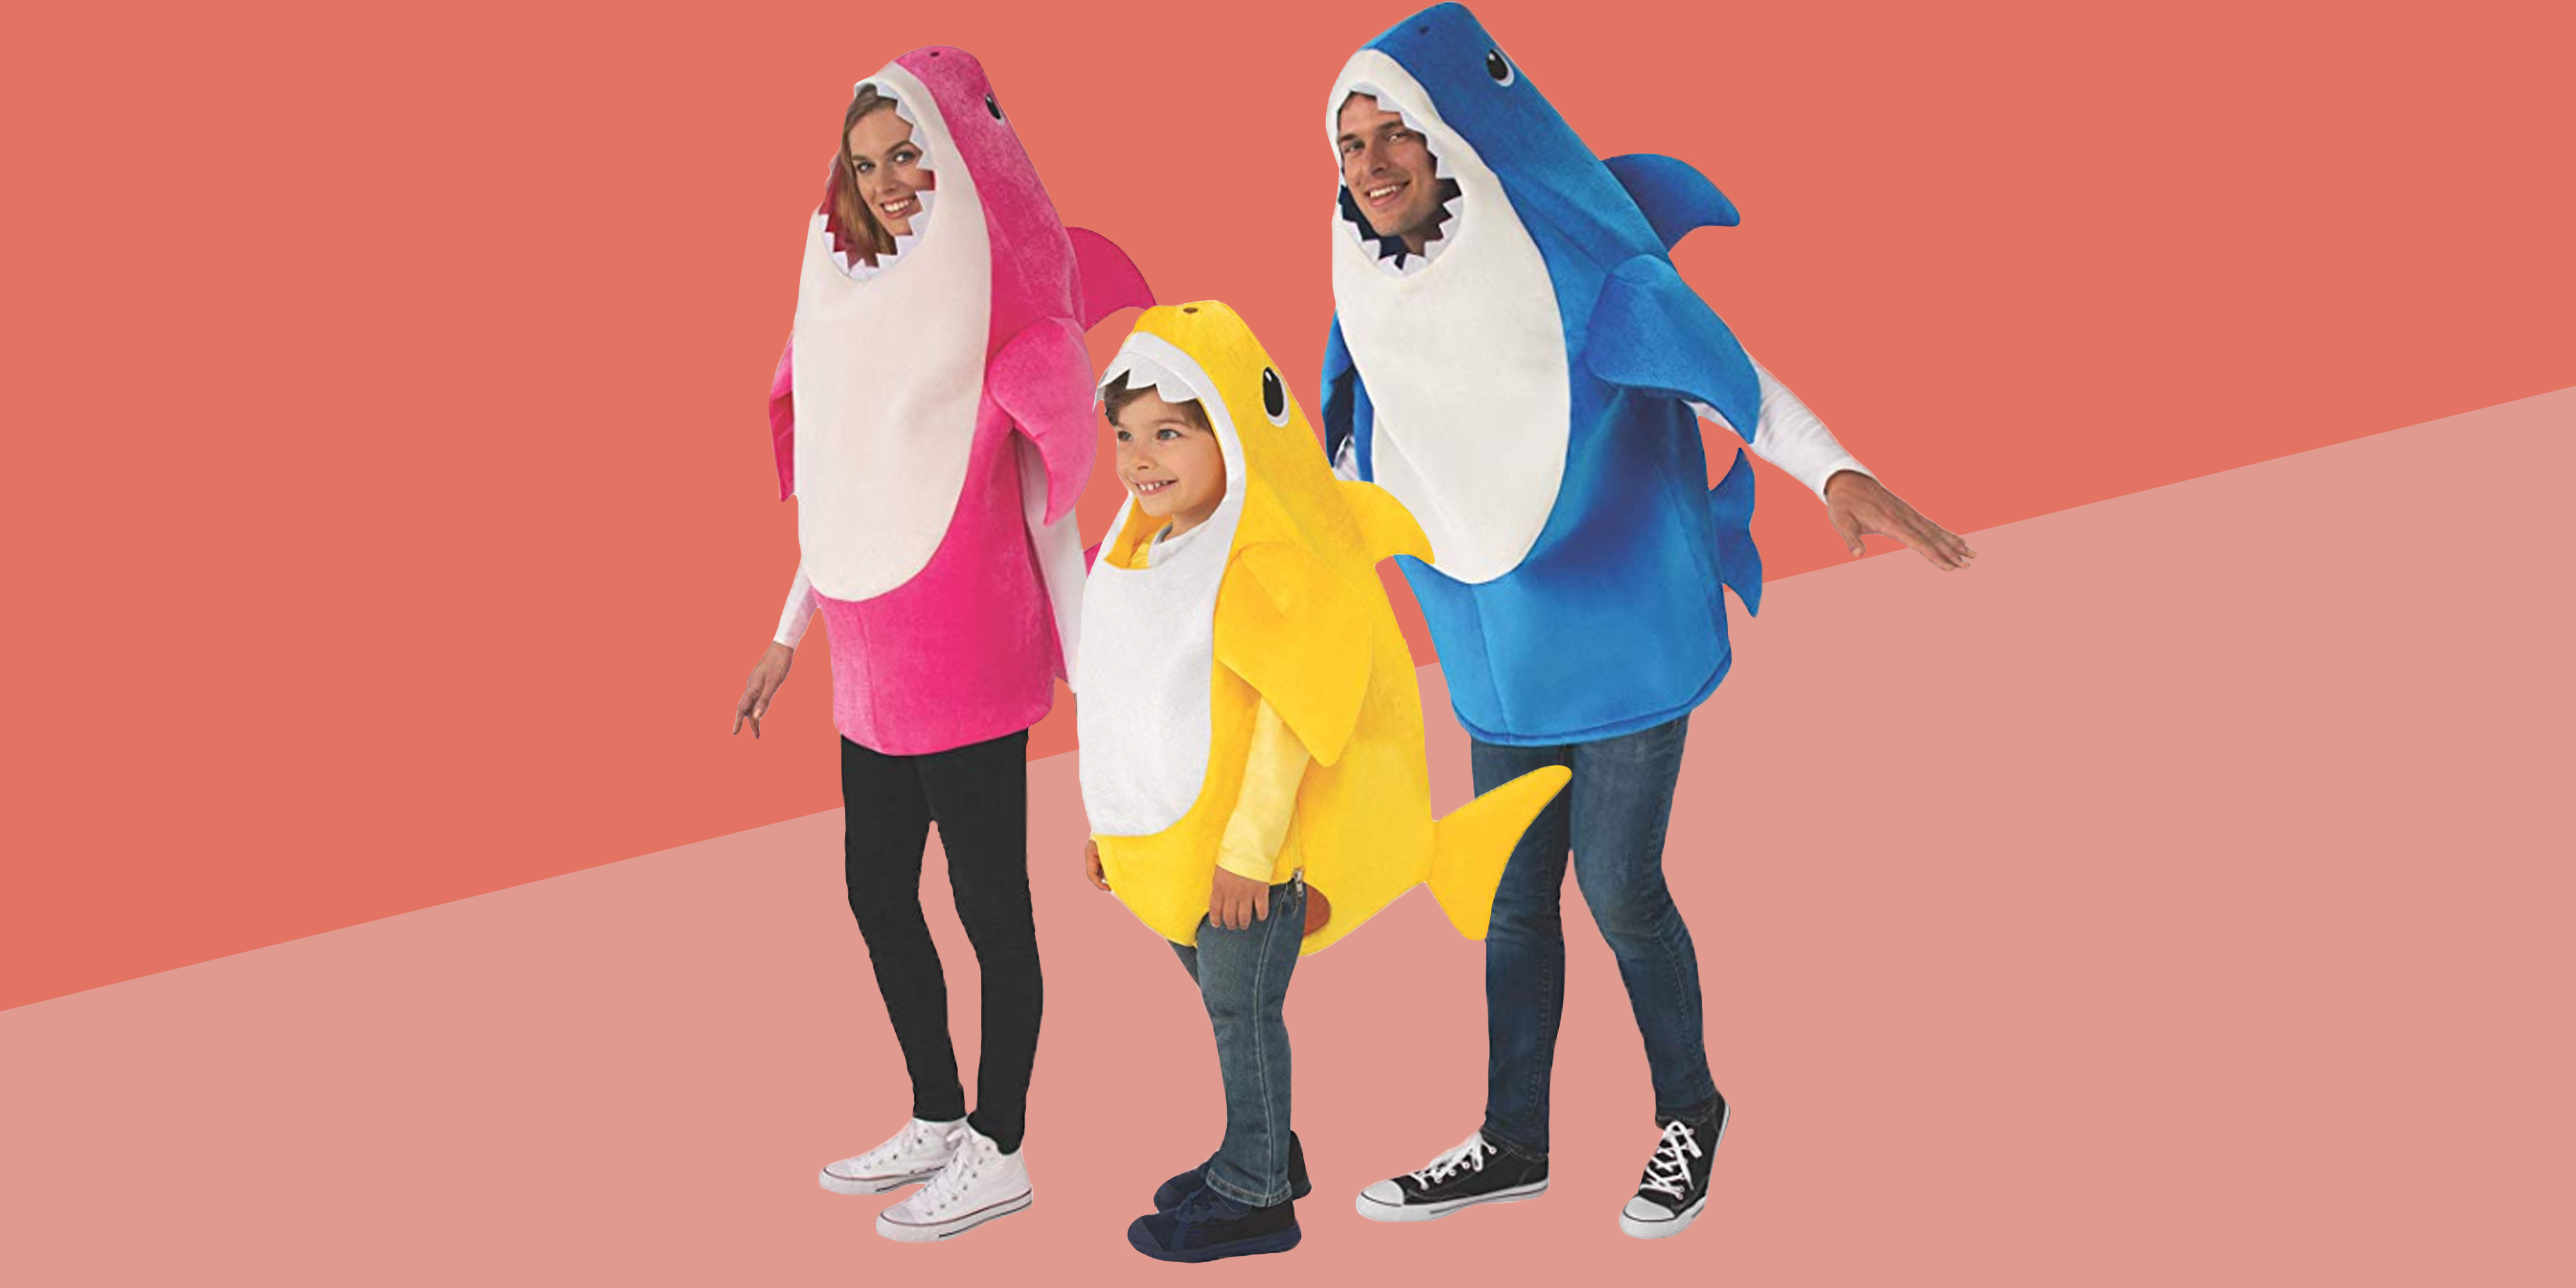 daddy shark costumes